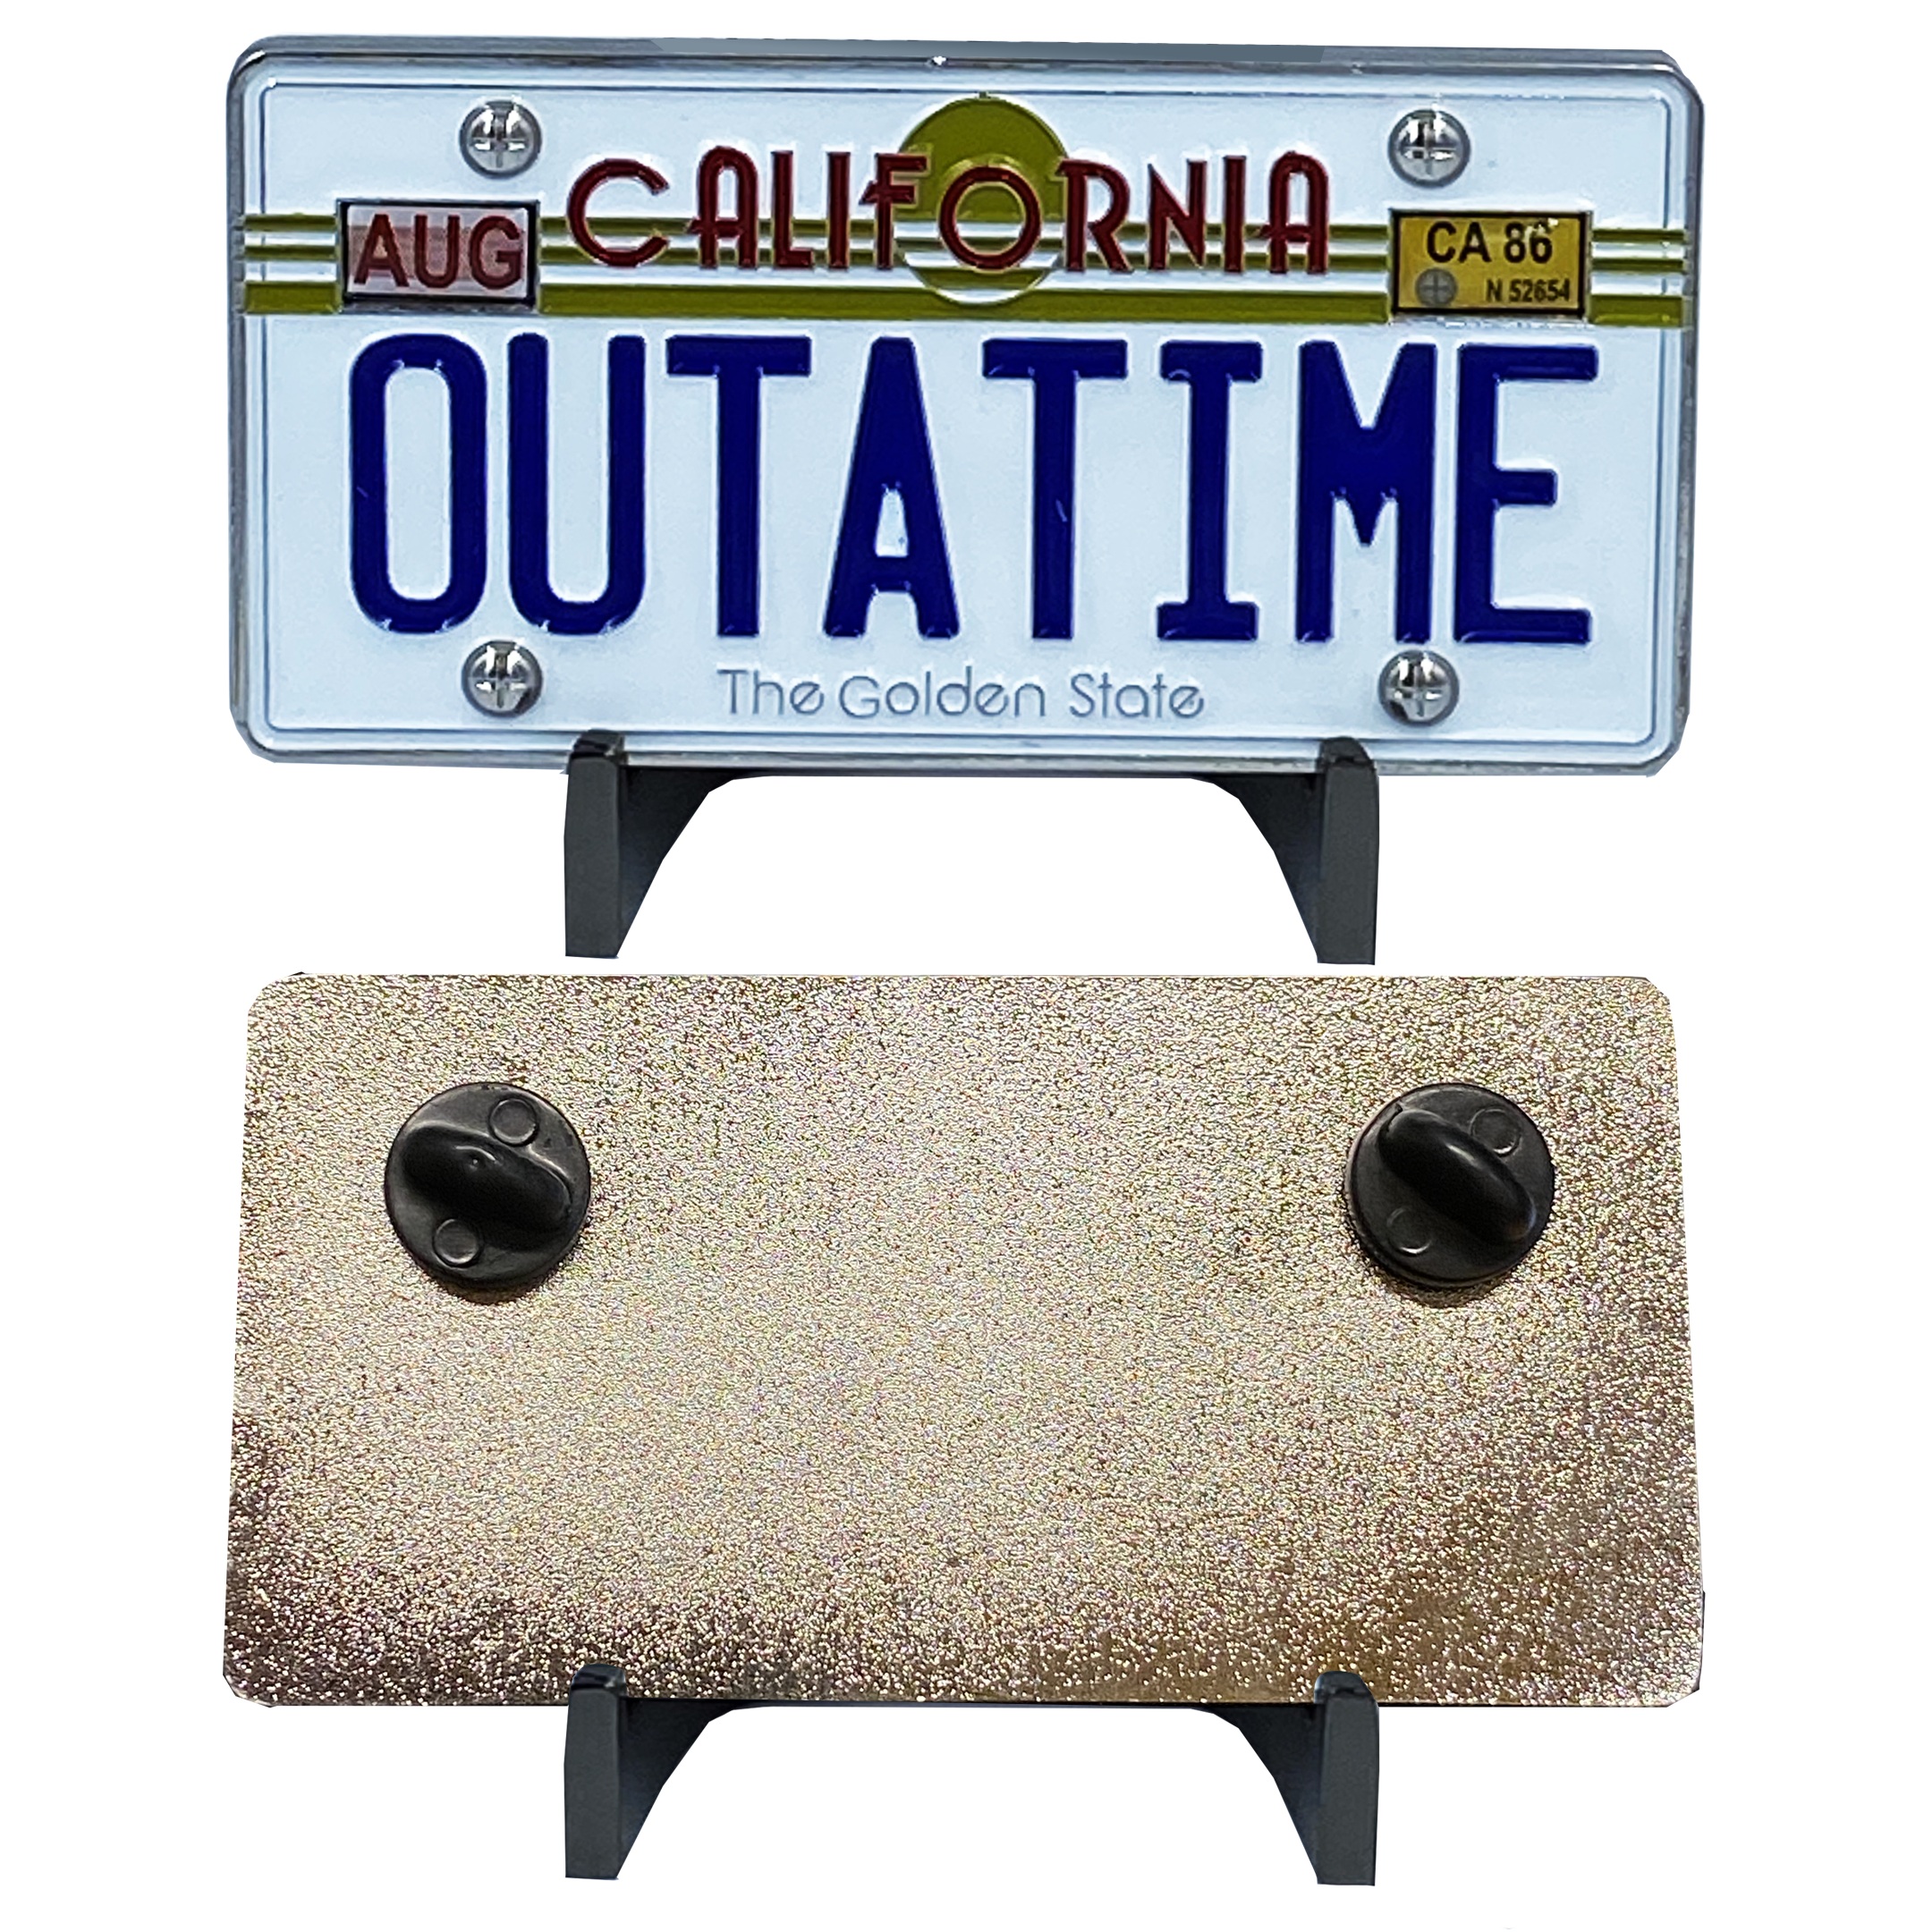 MM-010 Back to the Future inspired OUTATIME Delorean California License Plate Pin